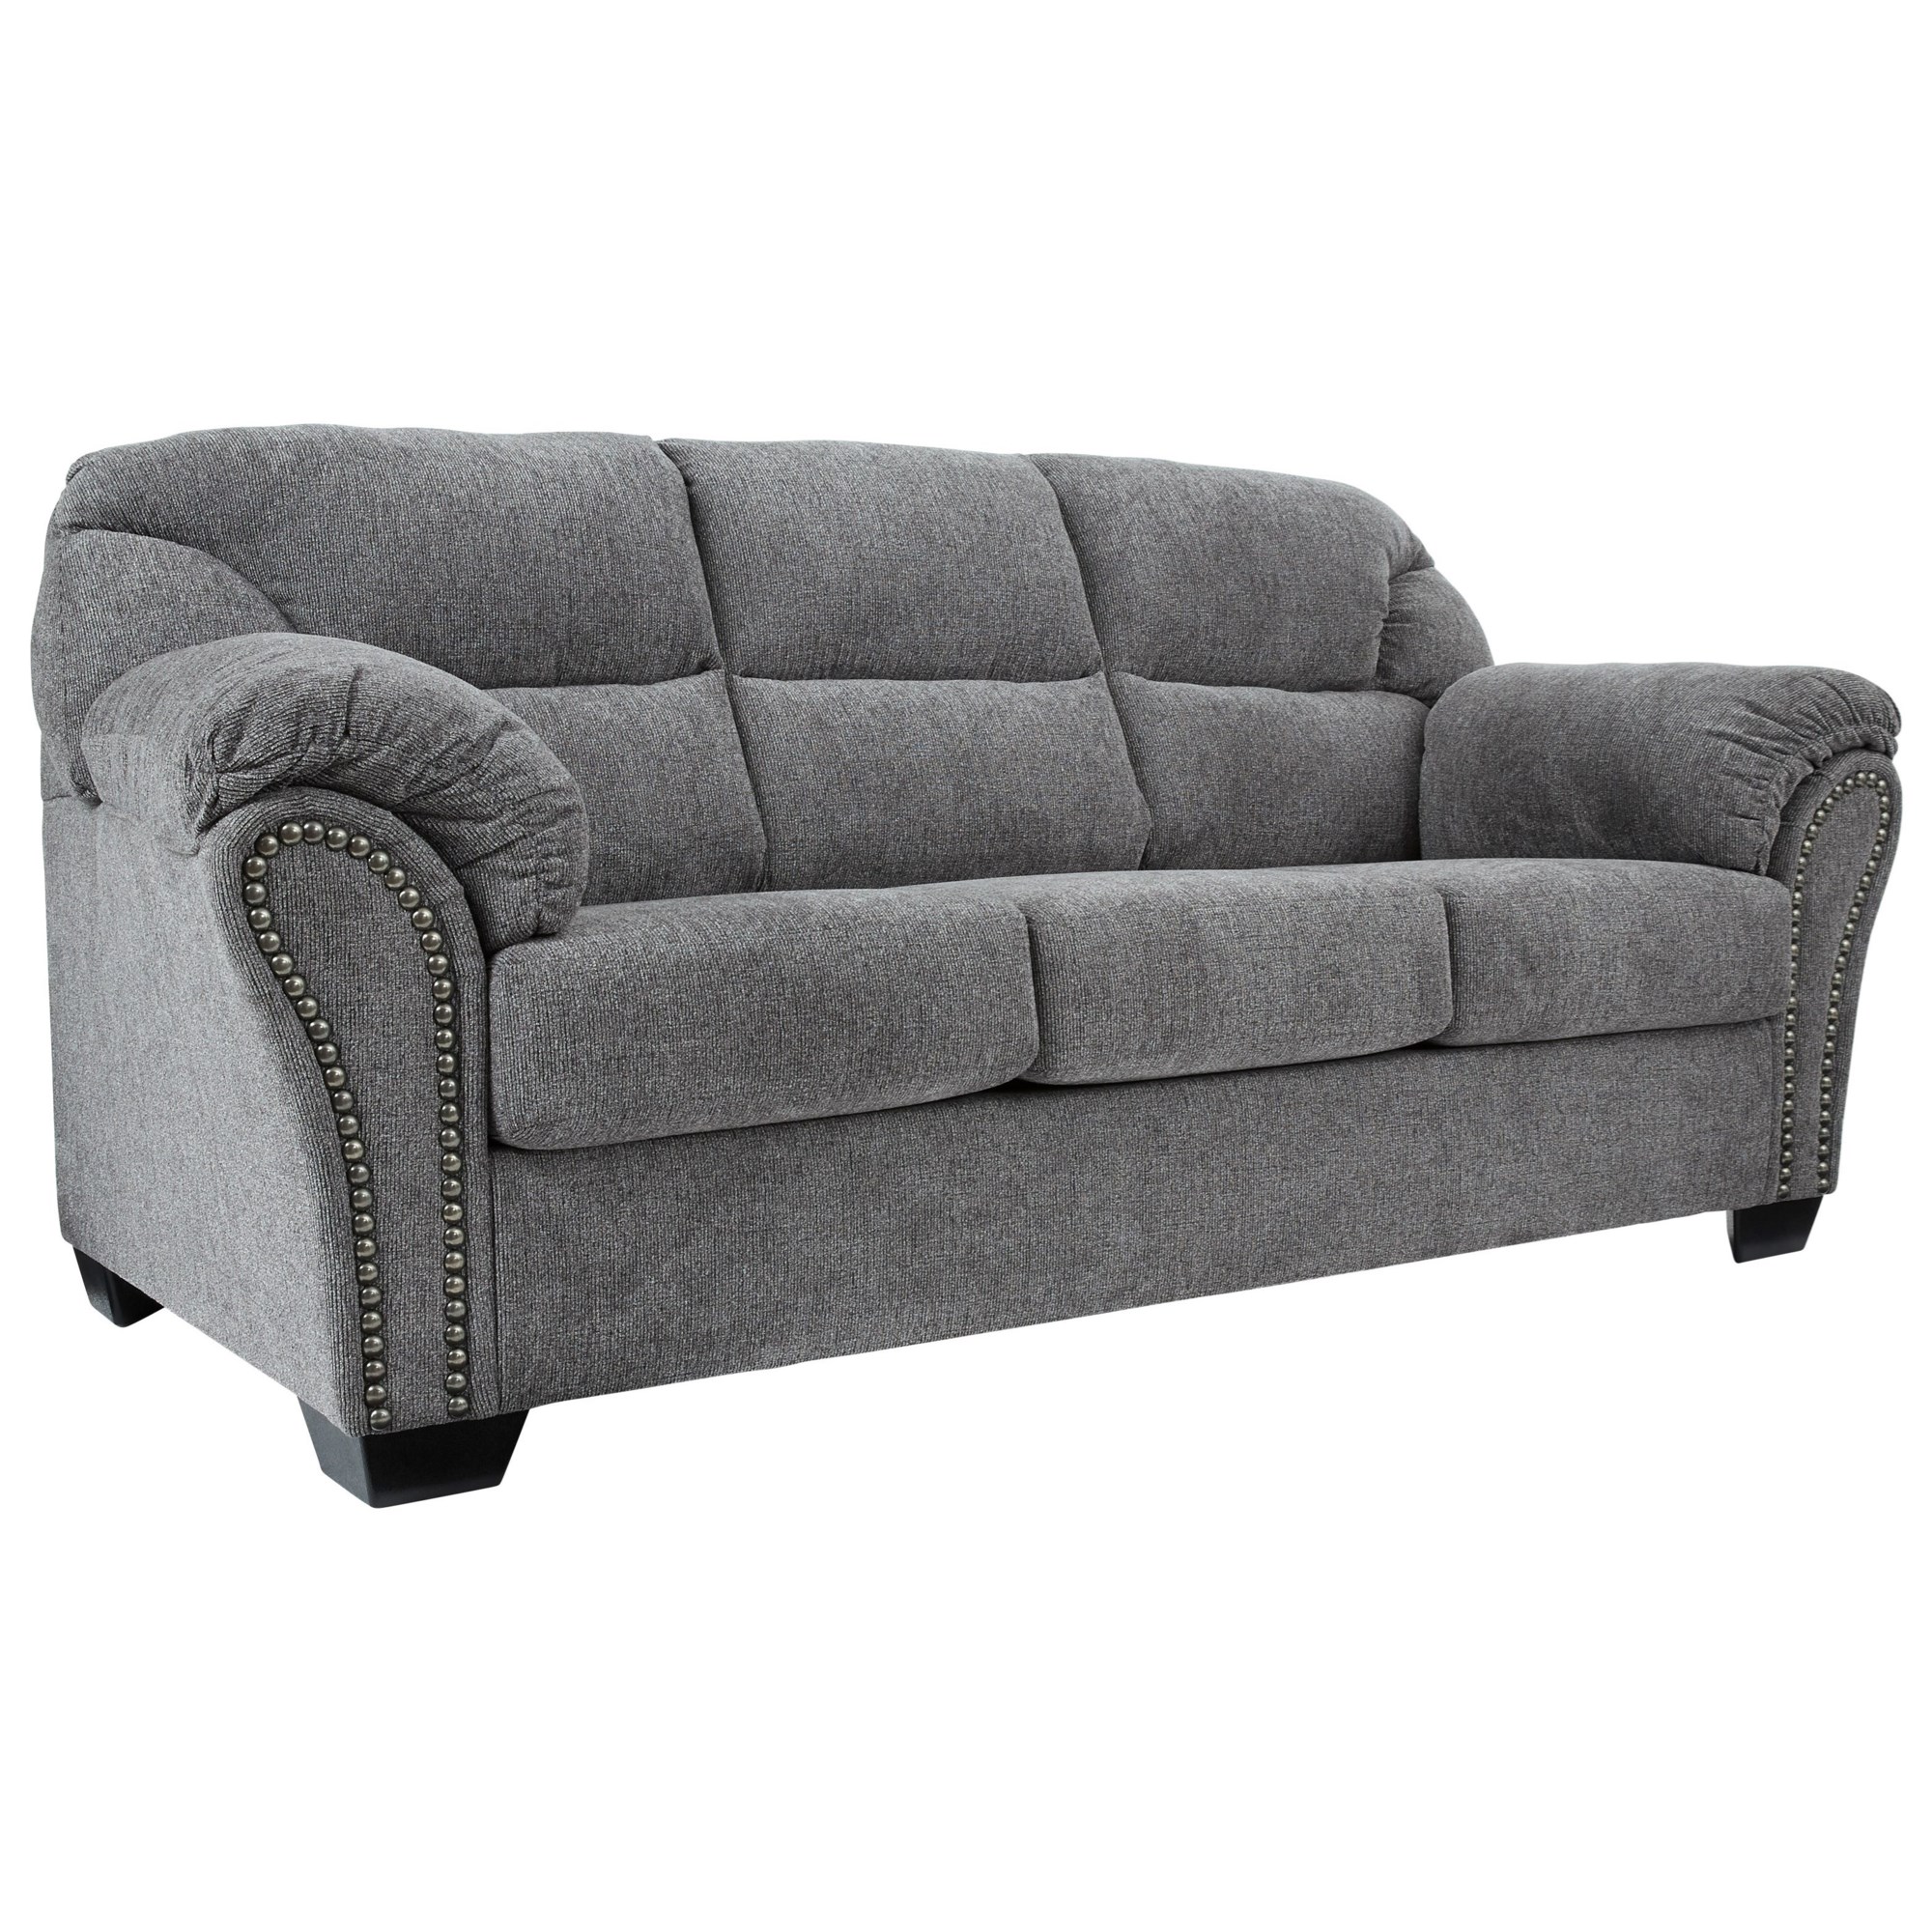 Benchcraft Allmaxx 2810538 Sofa with Pillow Arms and Nailhead Trim, Wayside Furniture & Mattress